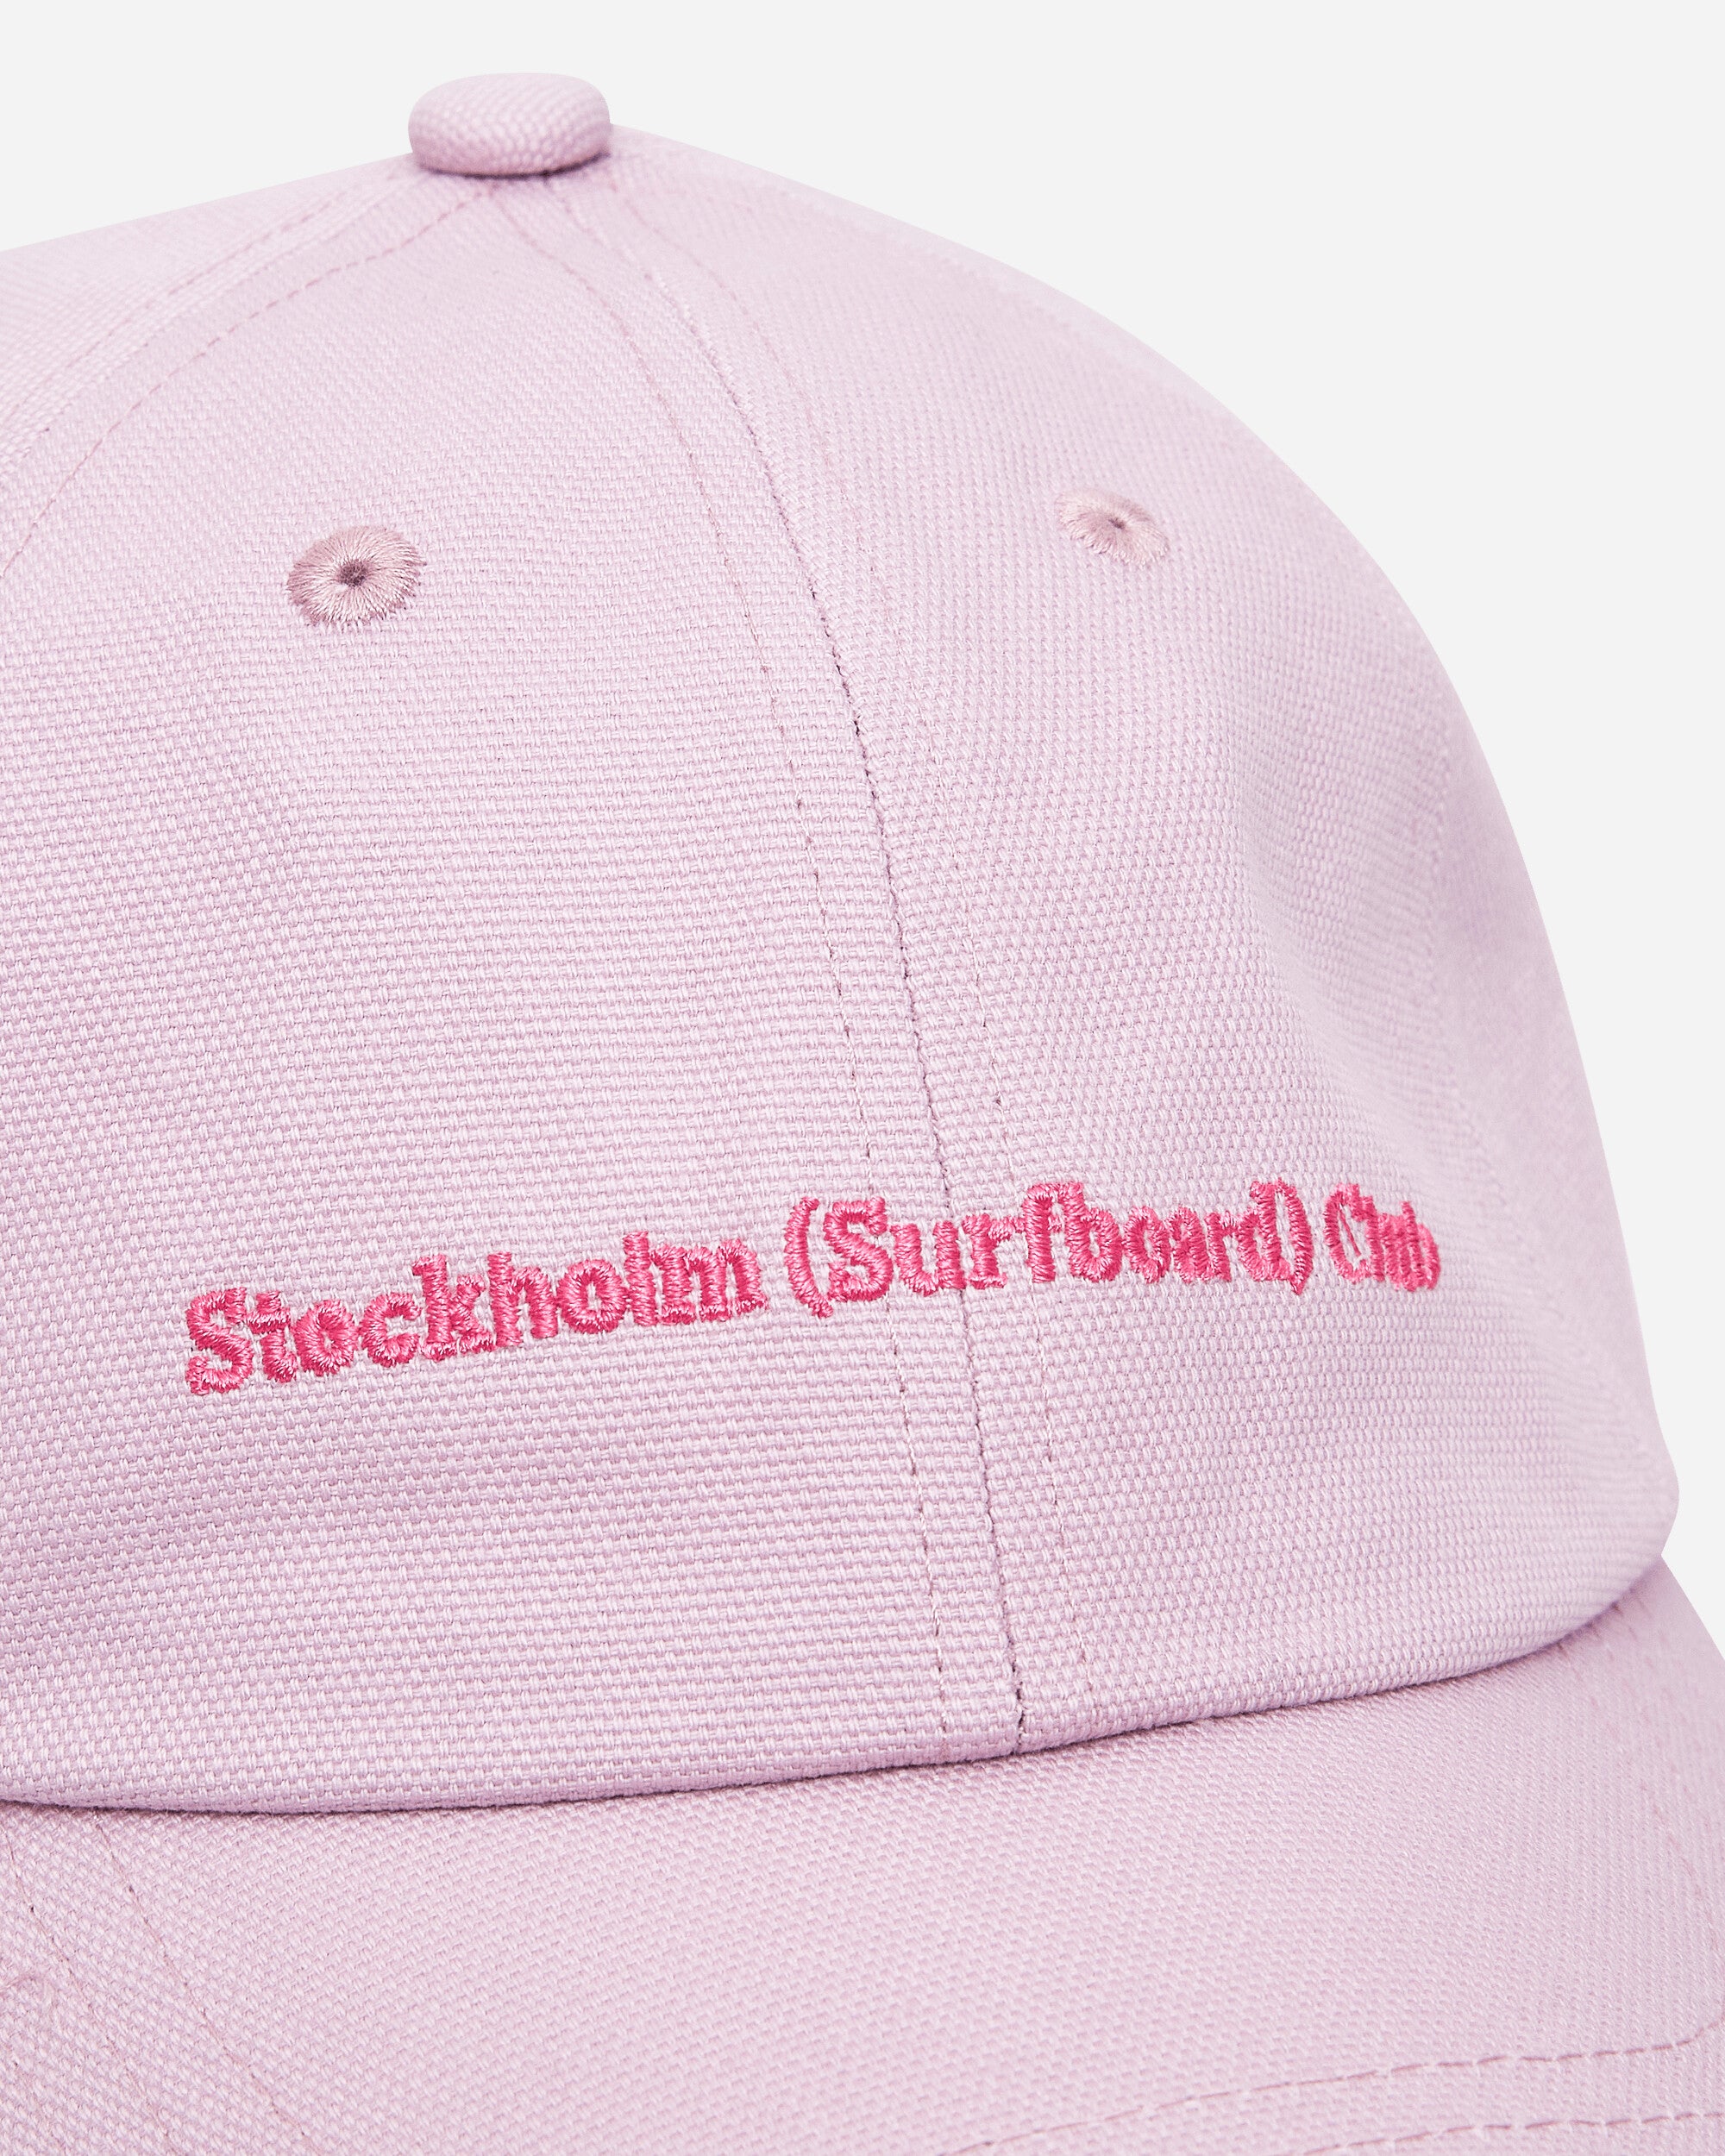 Stockholm (Surfboard) Club Pac Leaf Hats Caps PU7G54 001